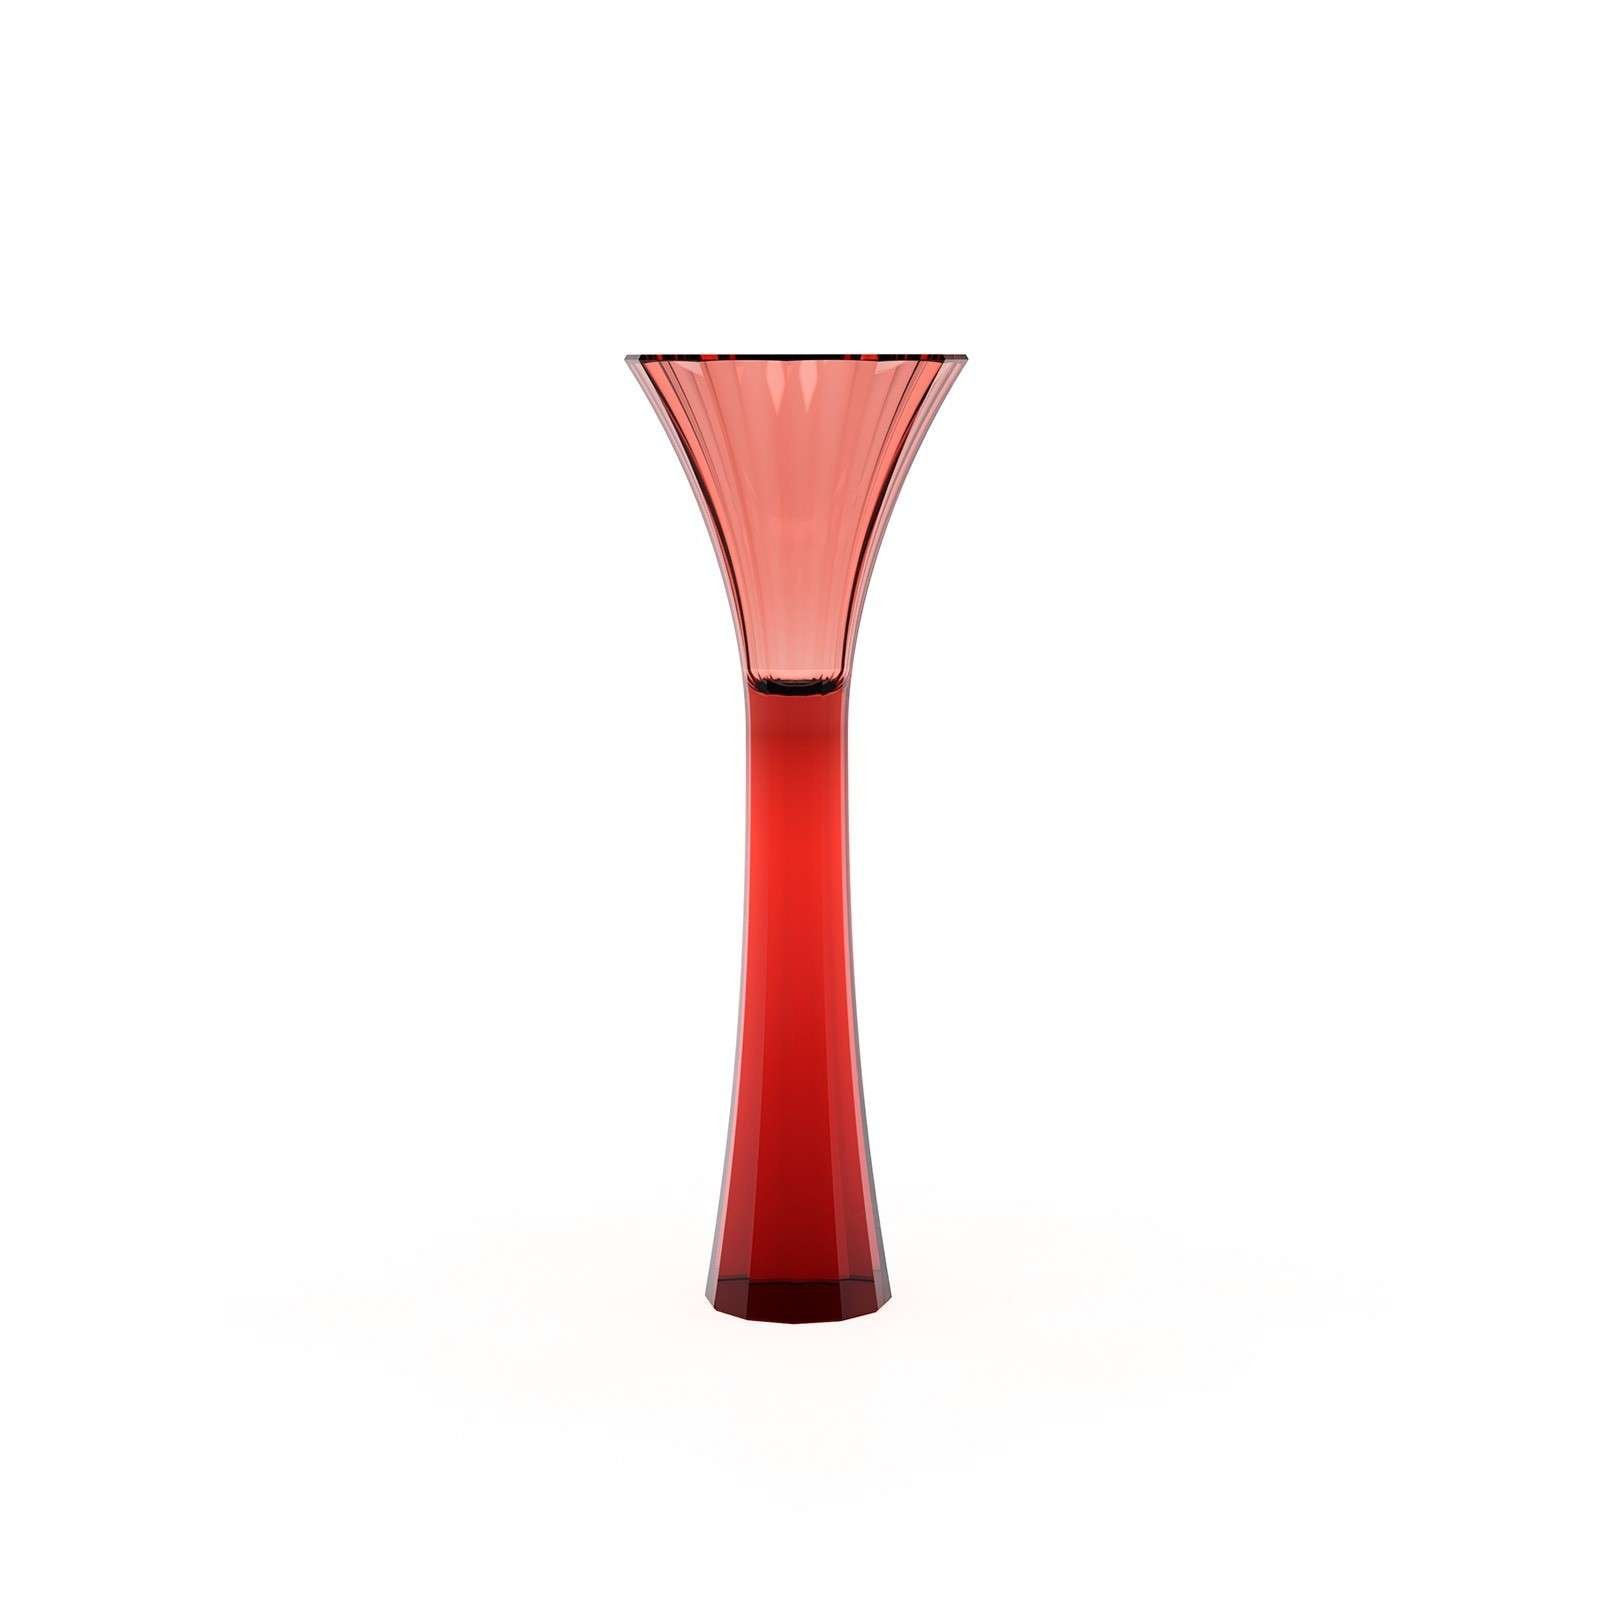 Industrial Design: The Flourishing Shot Glass by Miroslavo